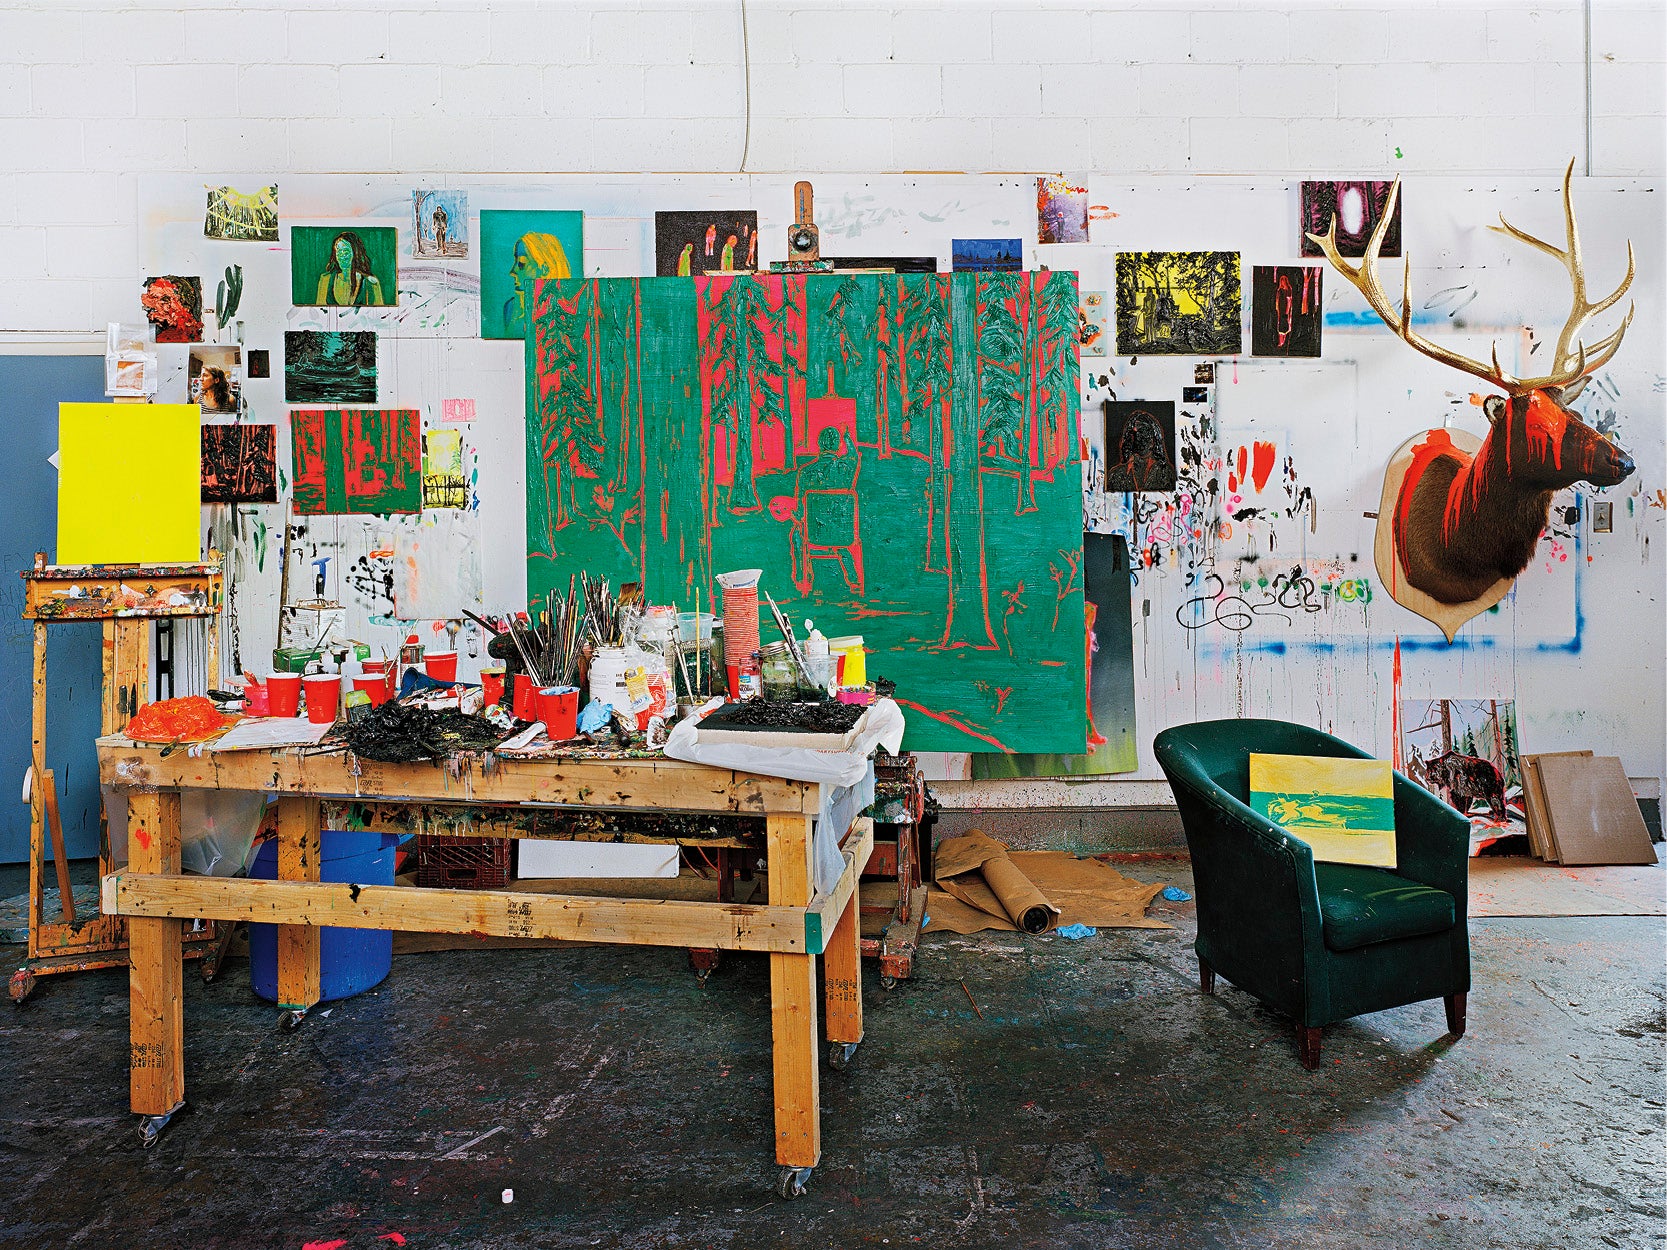 Photograph of Canadian painter Kim Dorland's art studio.